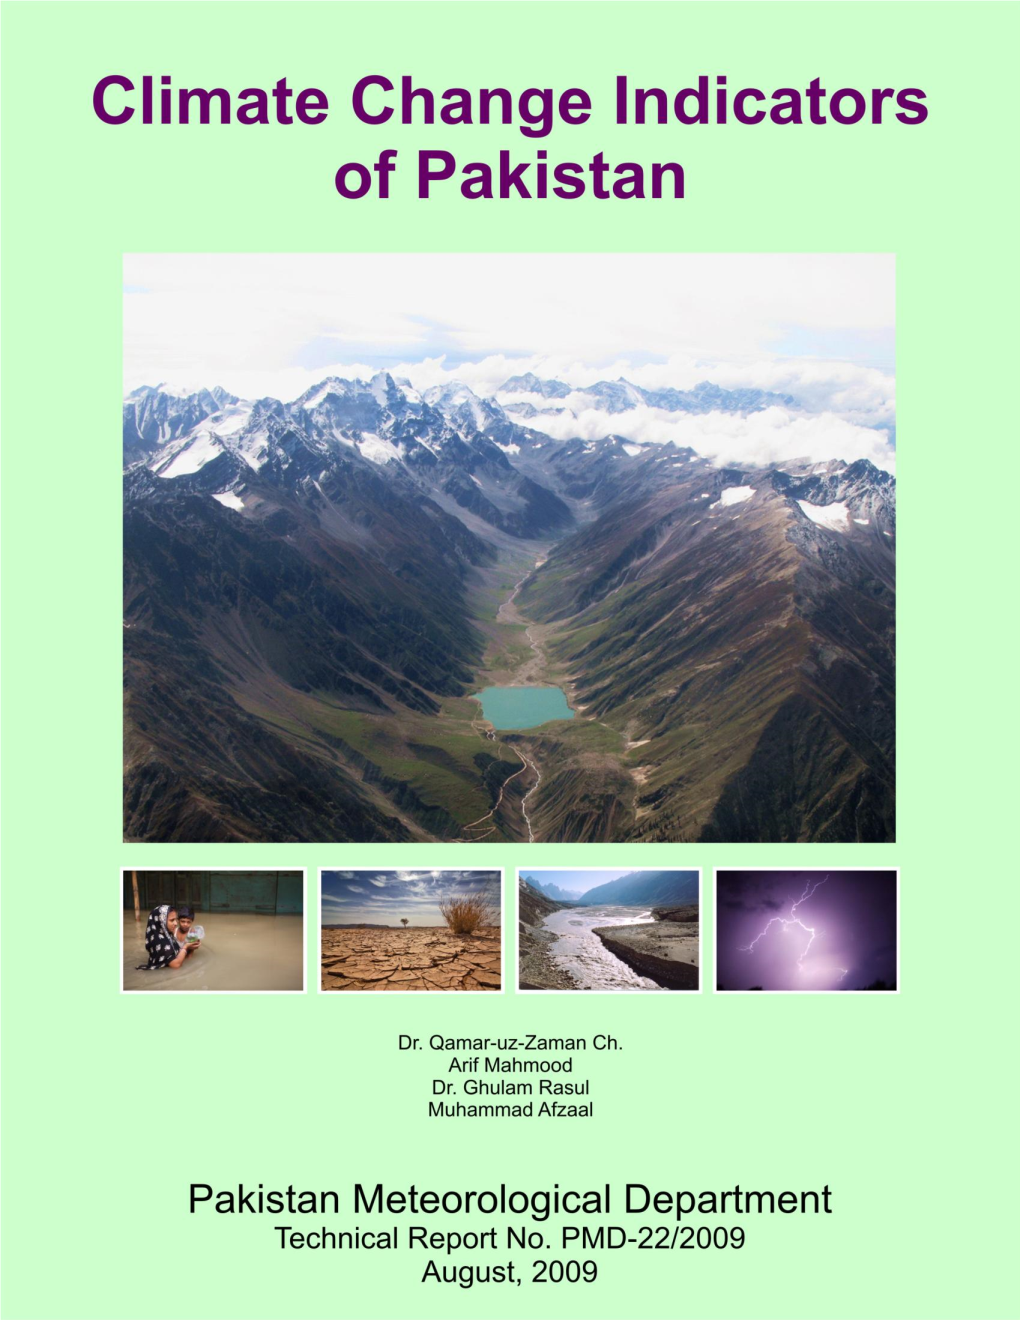 Report on Climate Change Indicators of Pakistan